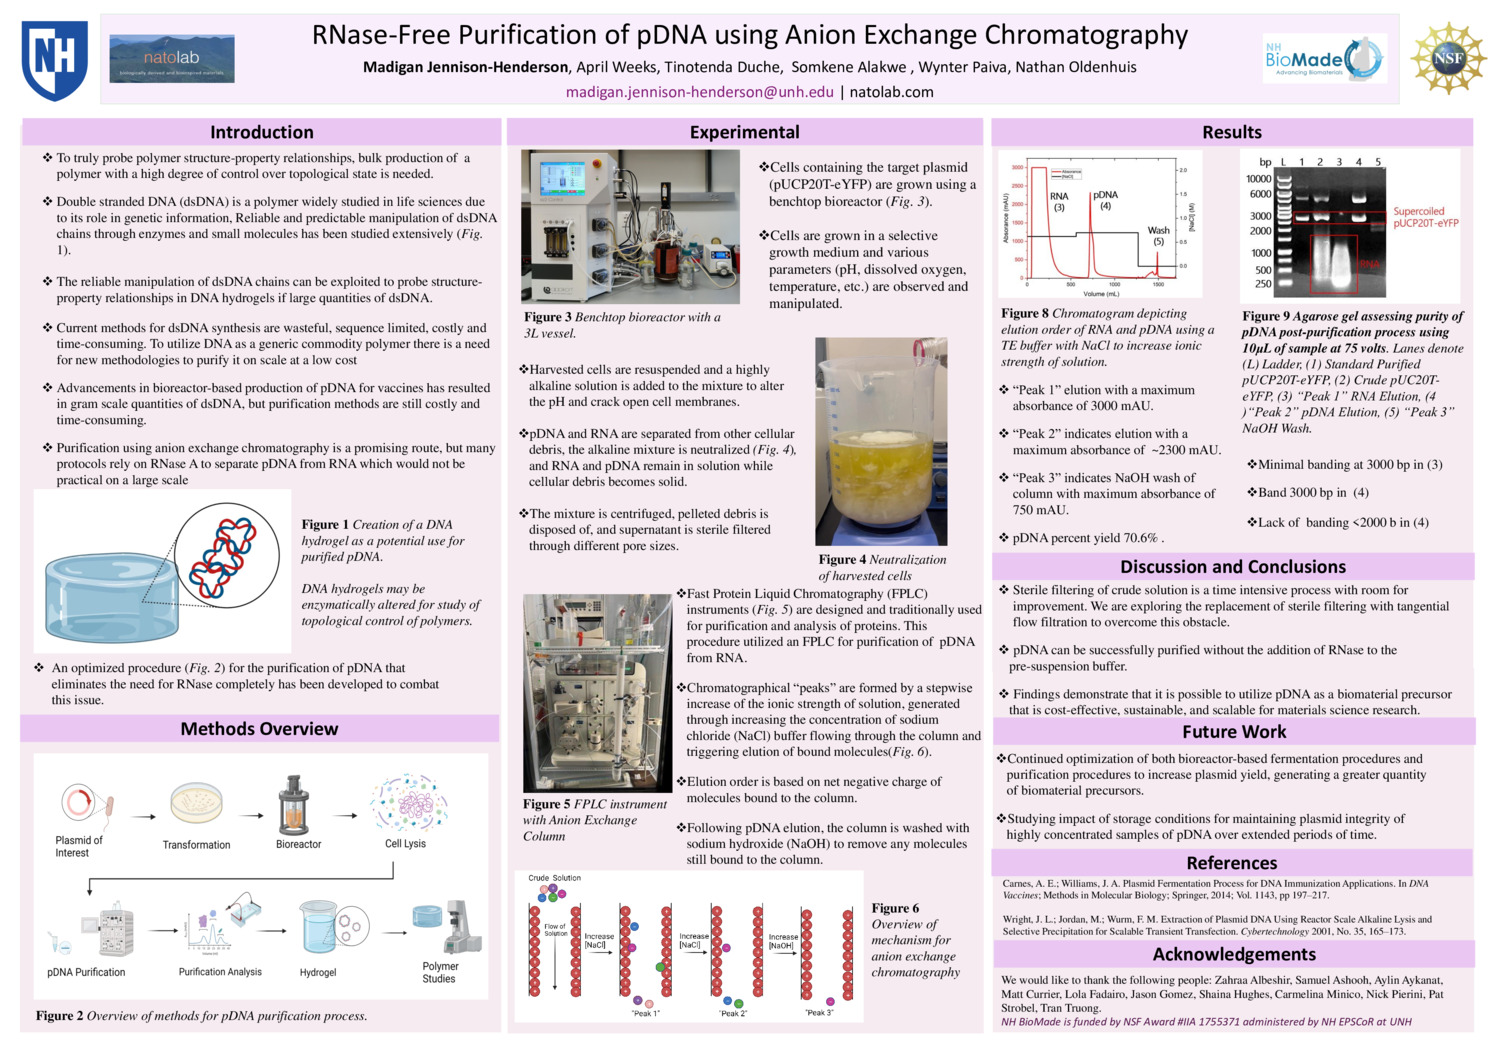 Rnase-Free Purification Of Pdna Using Anion Exchange Chromatography by mvj1002